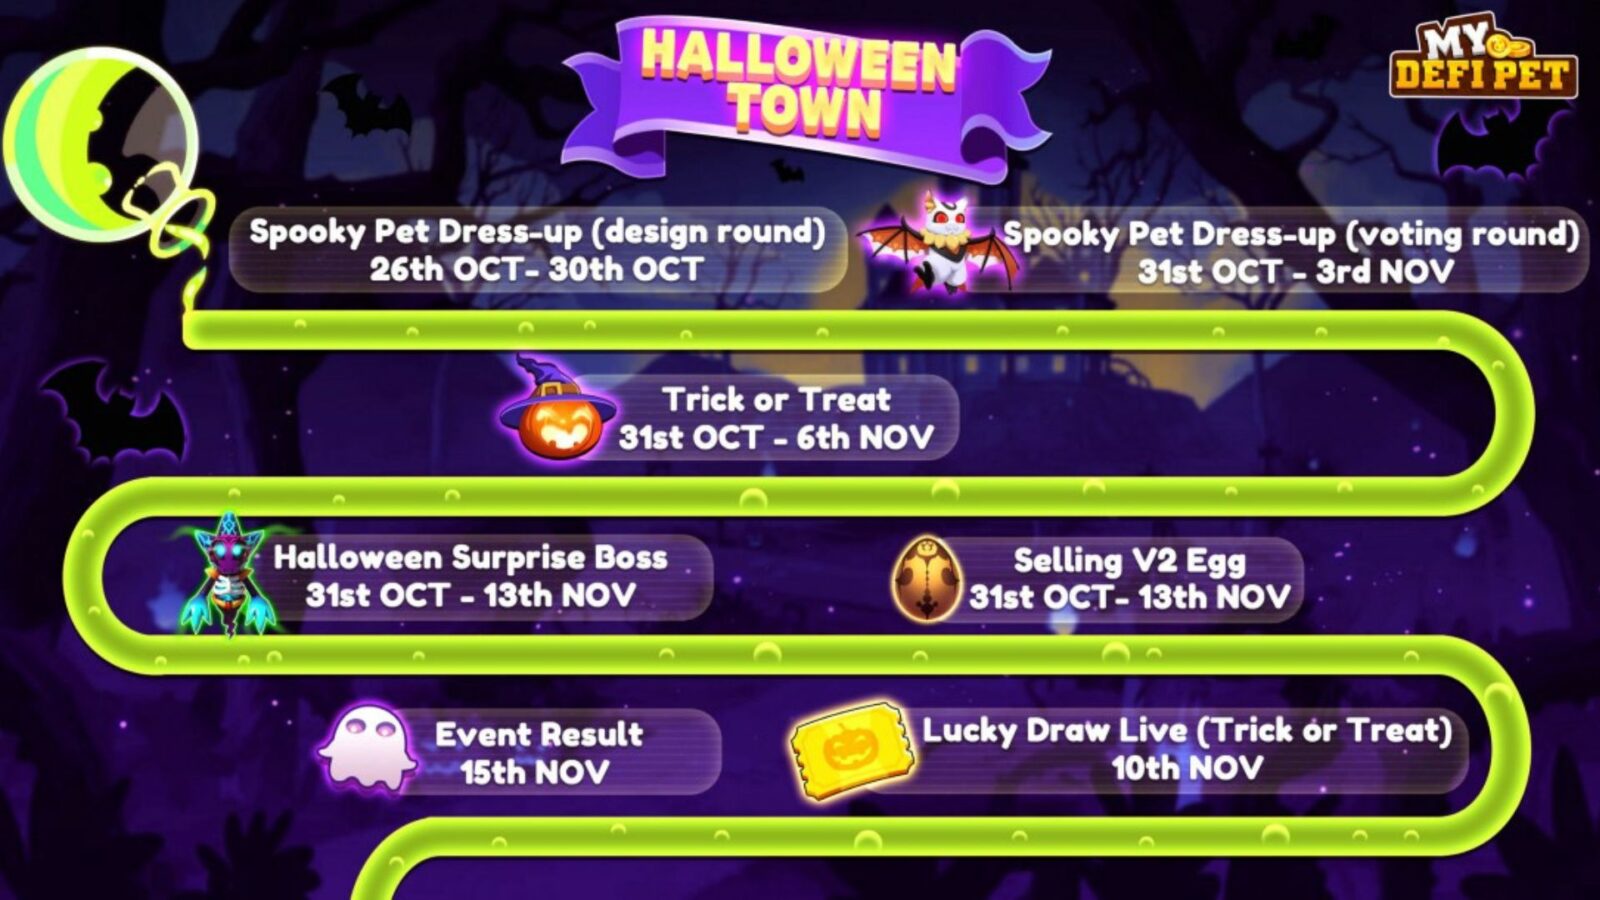 My Defi Pet Announces Three New Halloween Games